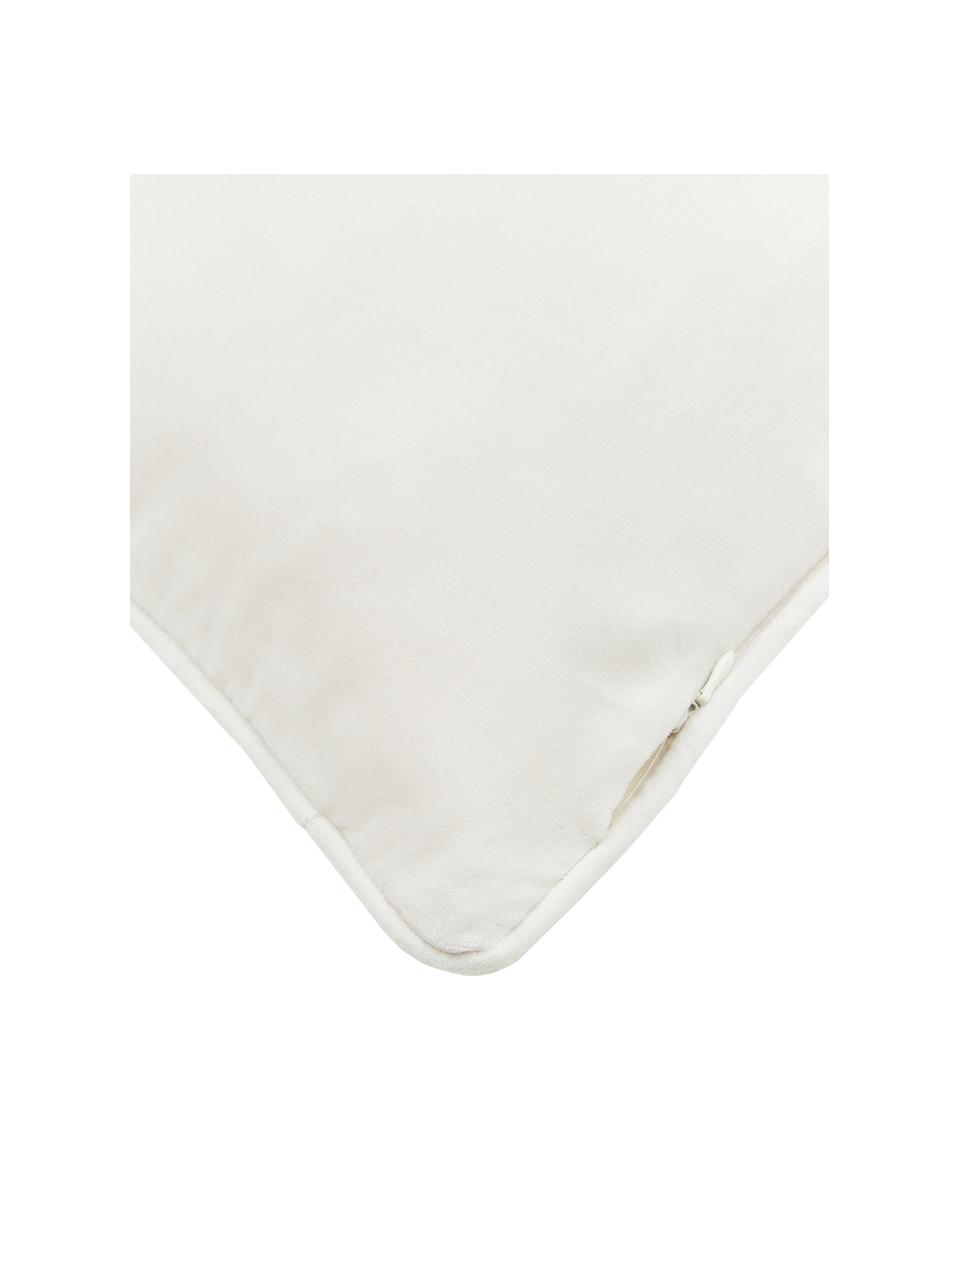 Federa arredo in velluto bianco crema Dana, 100% velluto di cotone, Beige, Larg. 40 x Lung. 40 cm